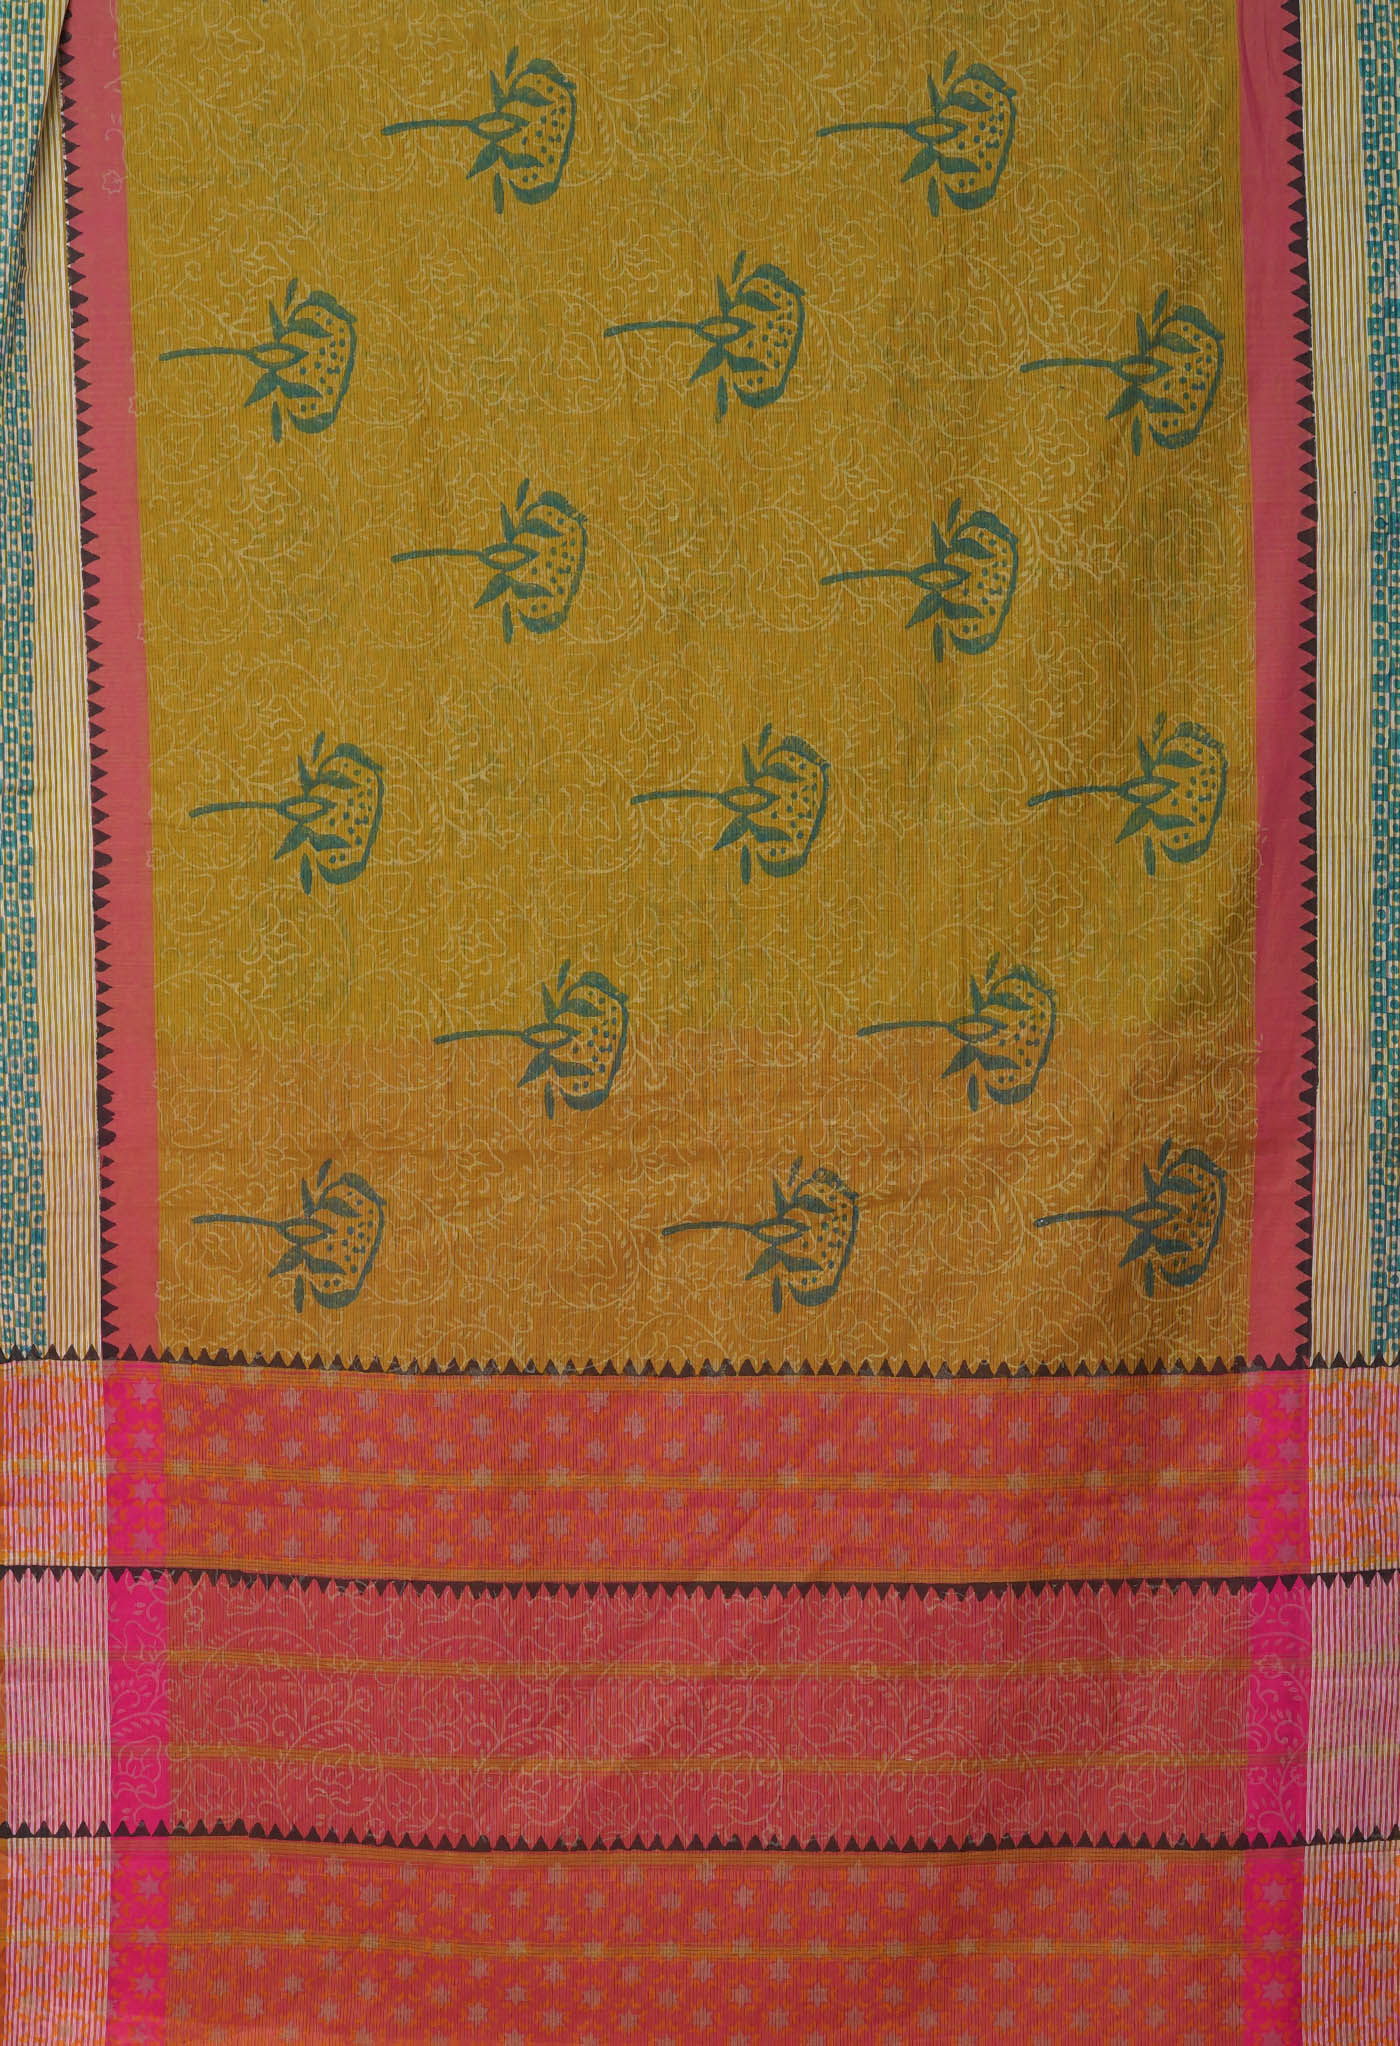 Mehind Green Pure Hand Block Printed Mangalgiri Cotton Saree